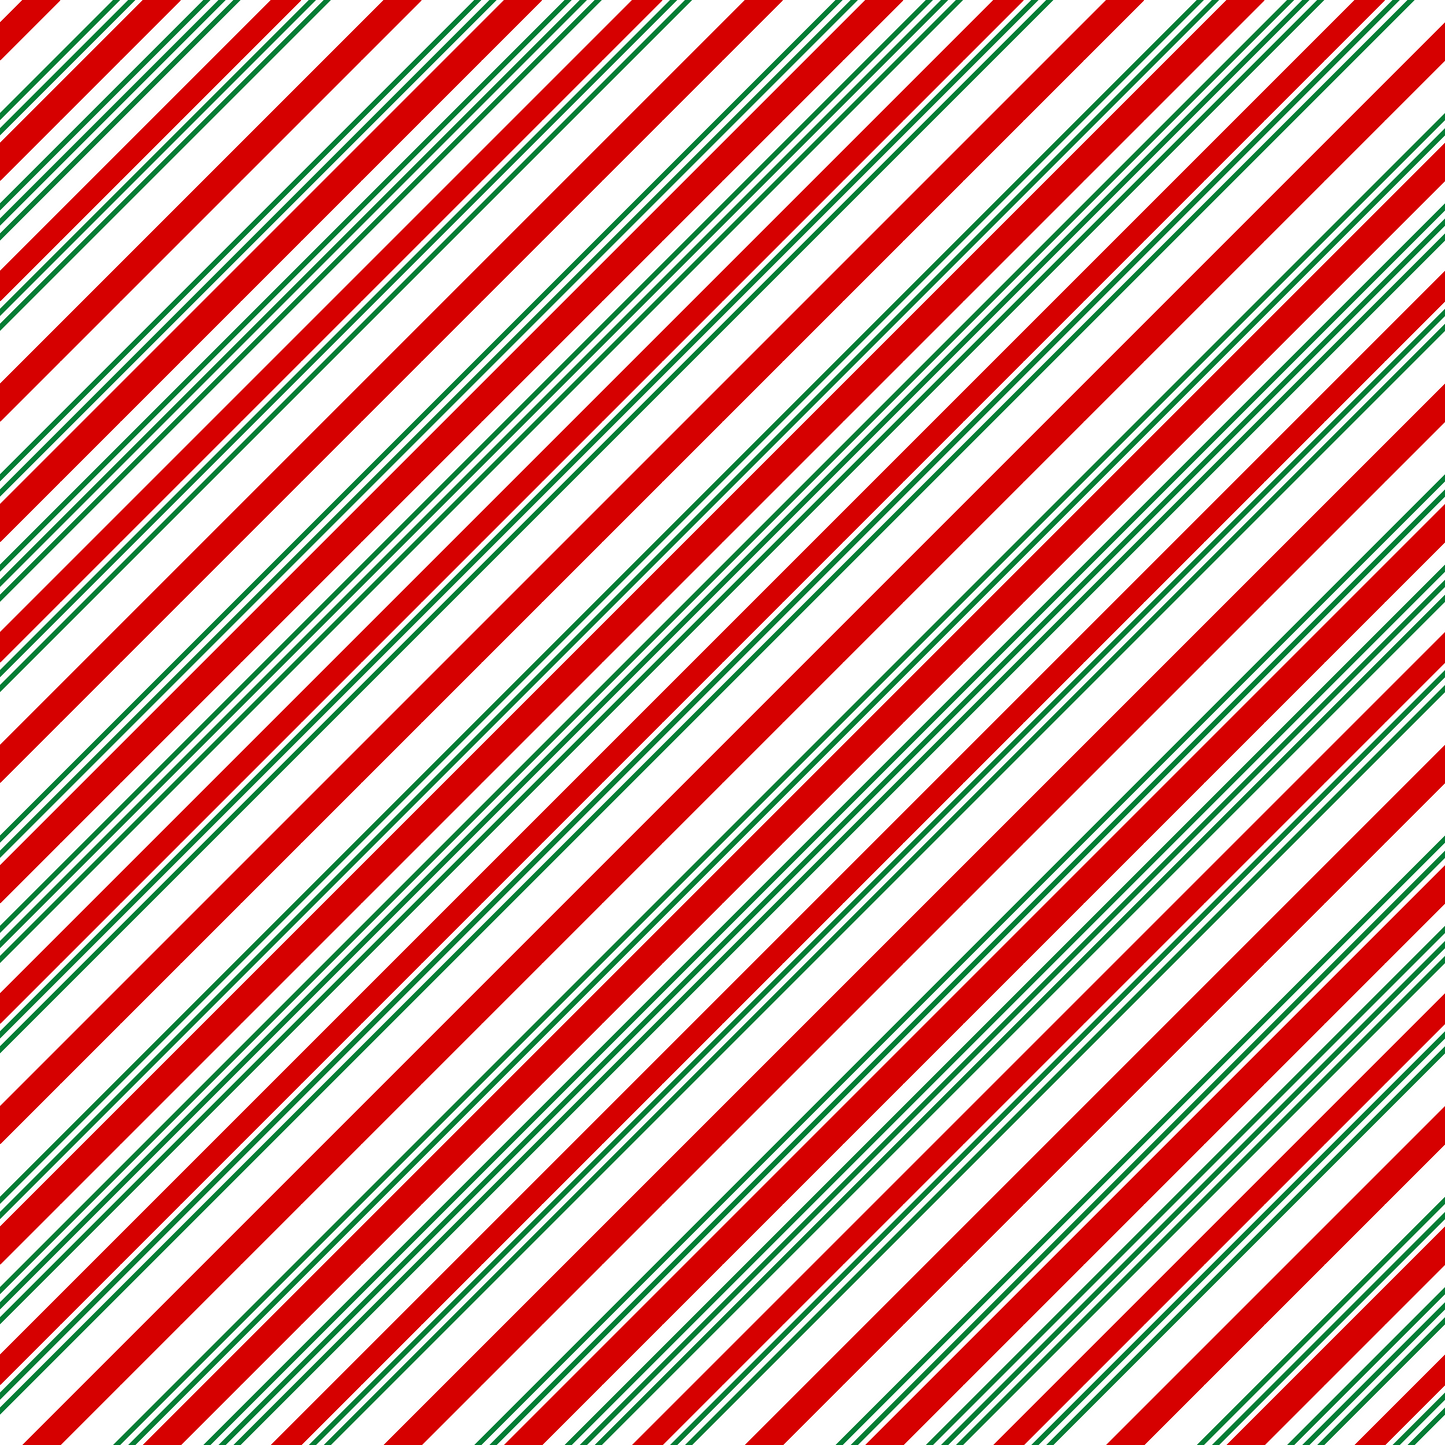 Candy Cane Stripes - Rayures rouges et vertes 017